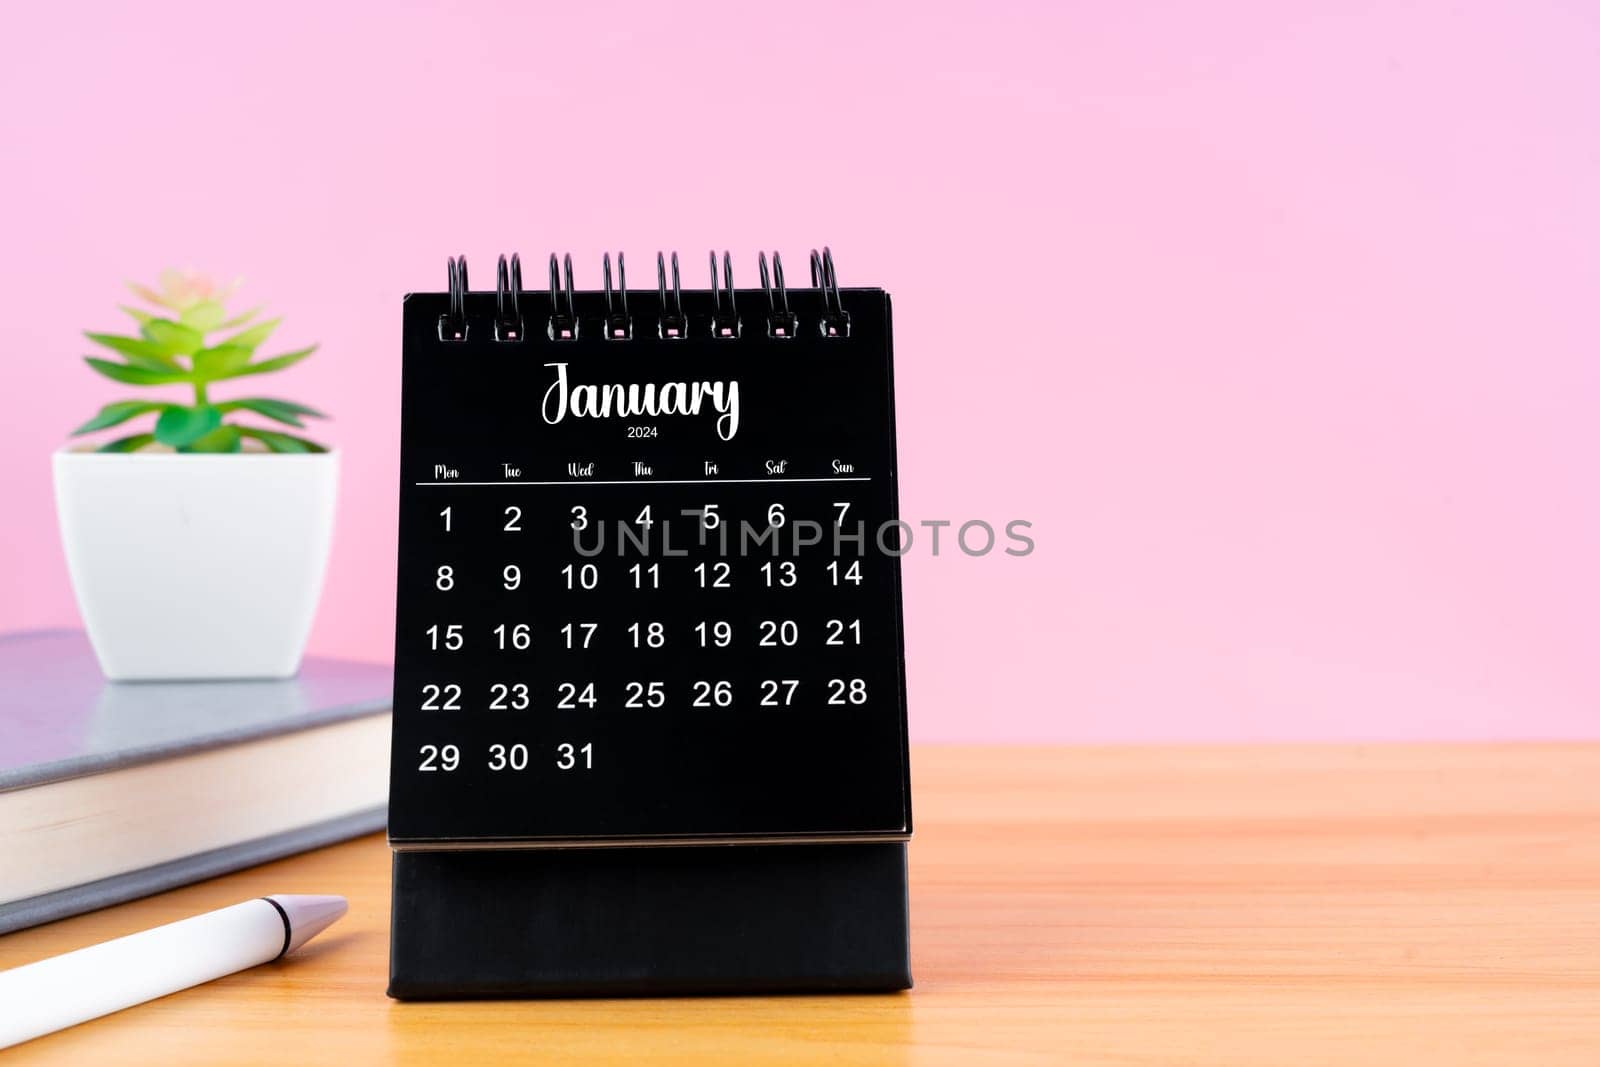 January Mini desk calendar for 2024 year on worktable. by Gamjai